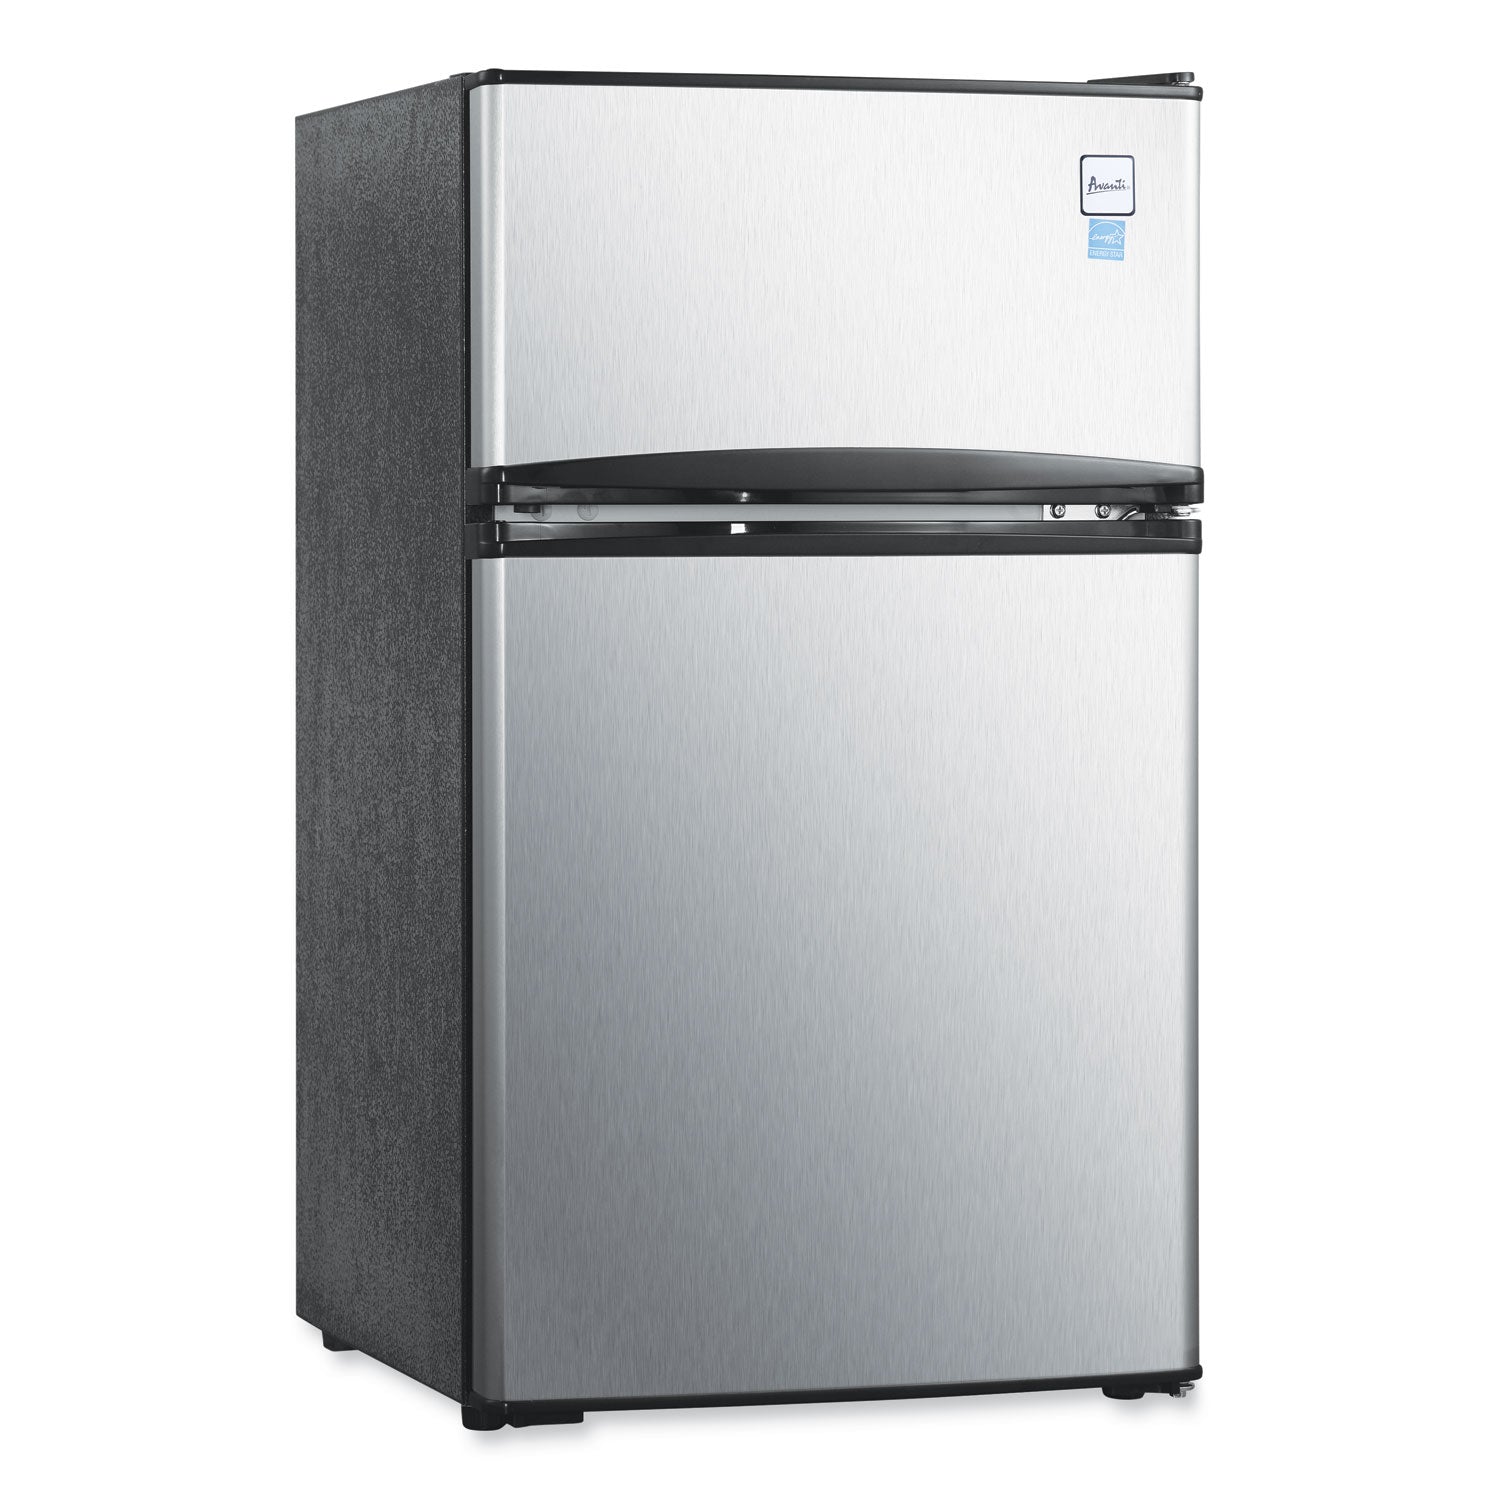 counter-height-31-cu-ft-two-door-refrigerator-freezer-black-stainless-steel_avara31b3s - 1